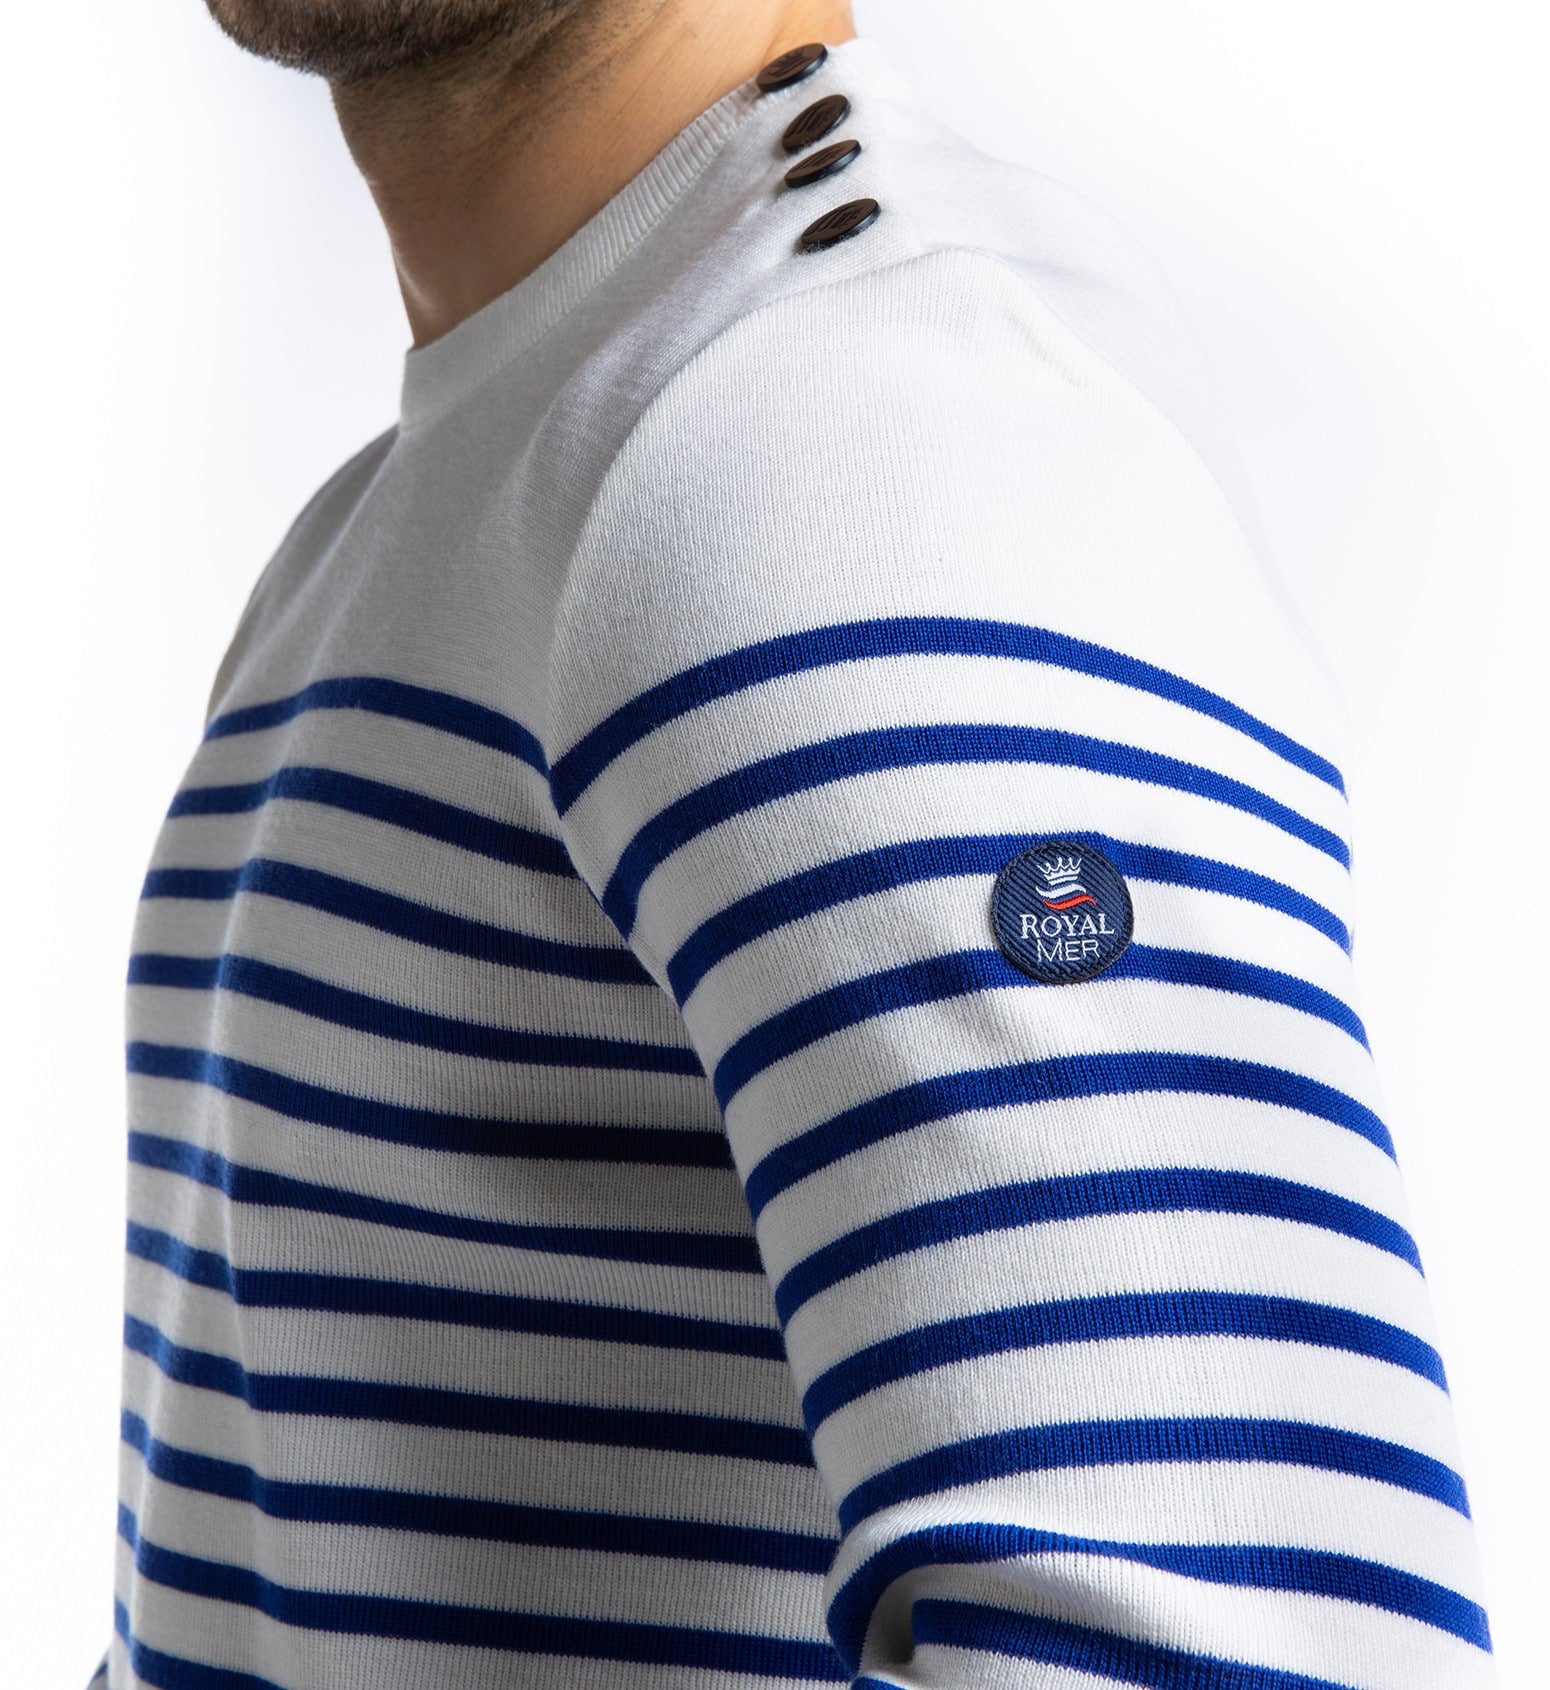 Striped sailor sweater